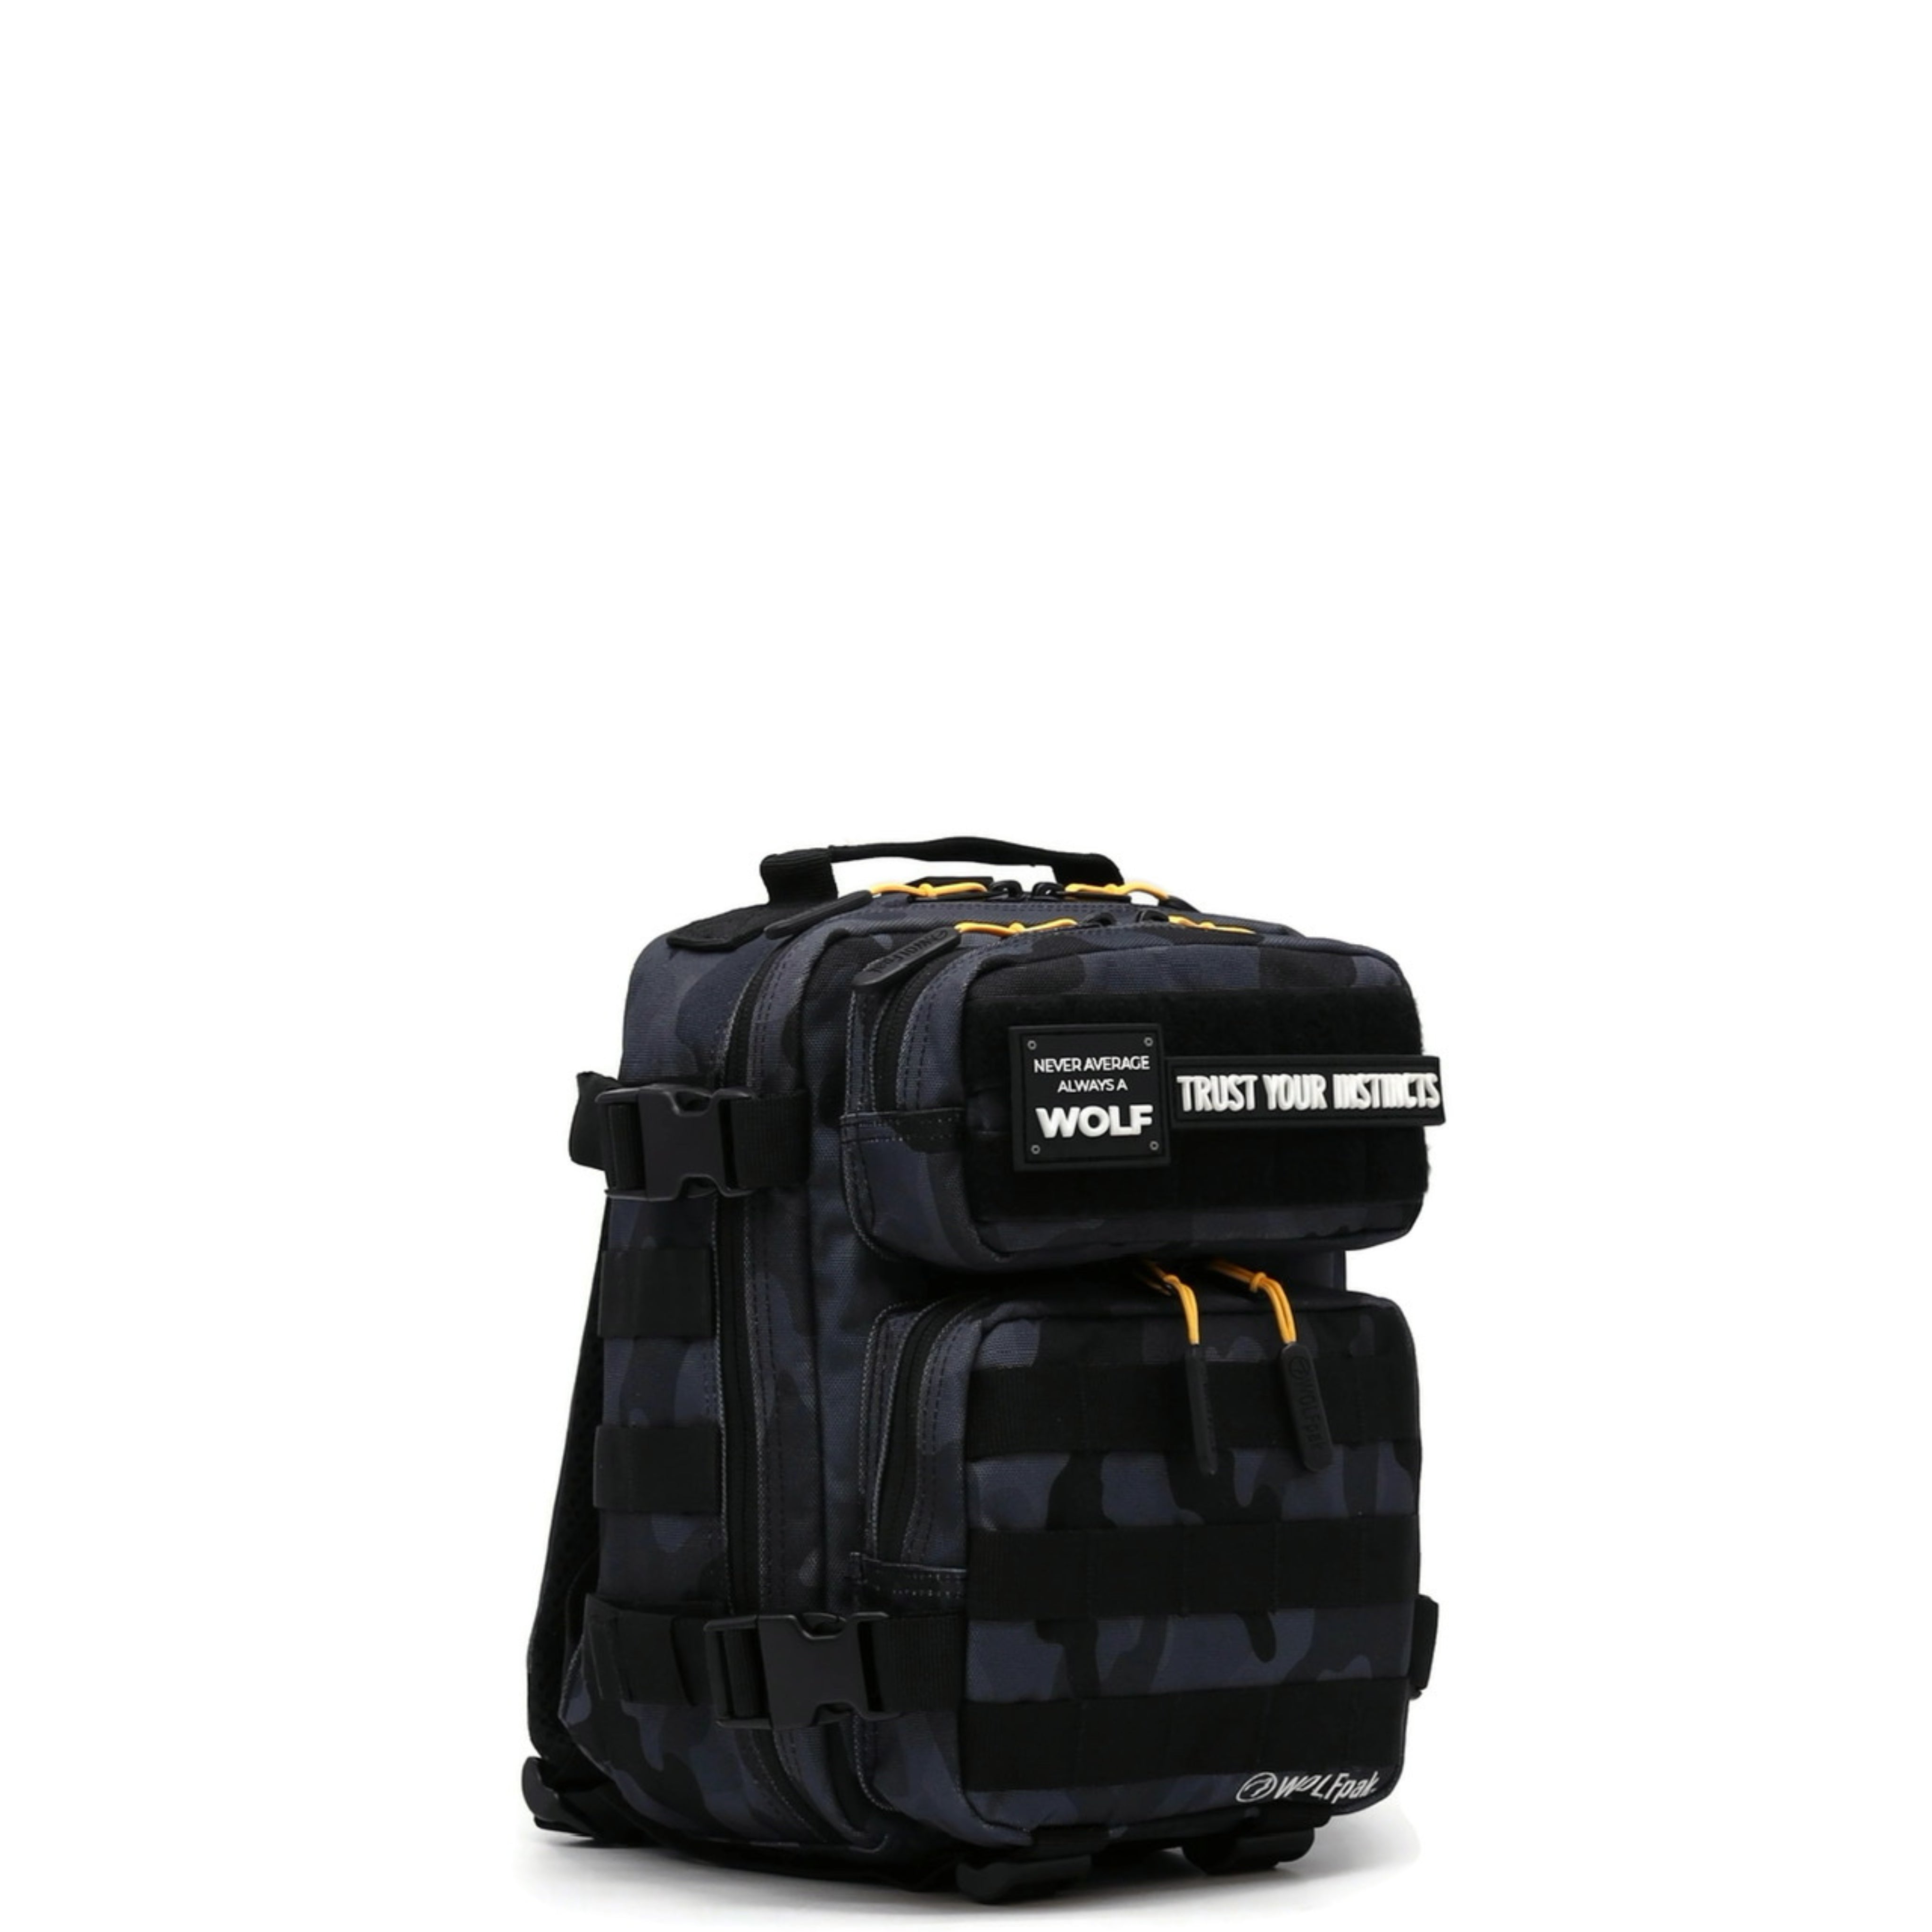 9L Backpack Mini Black Camo Orange